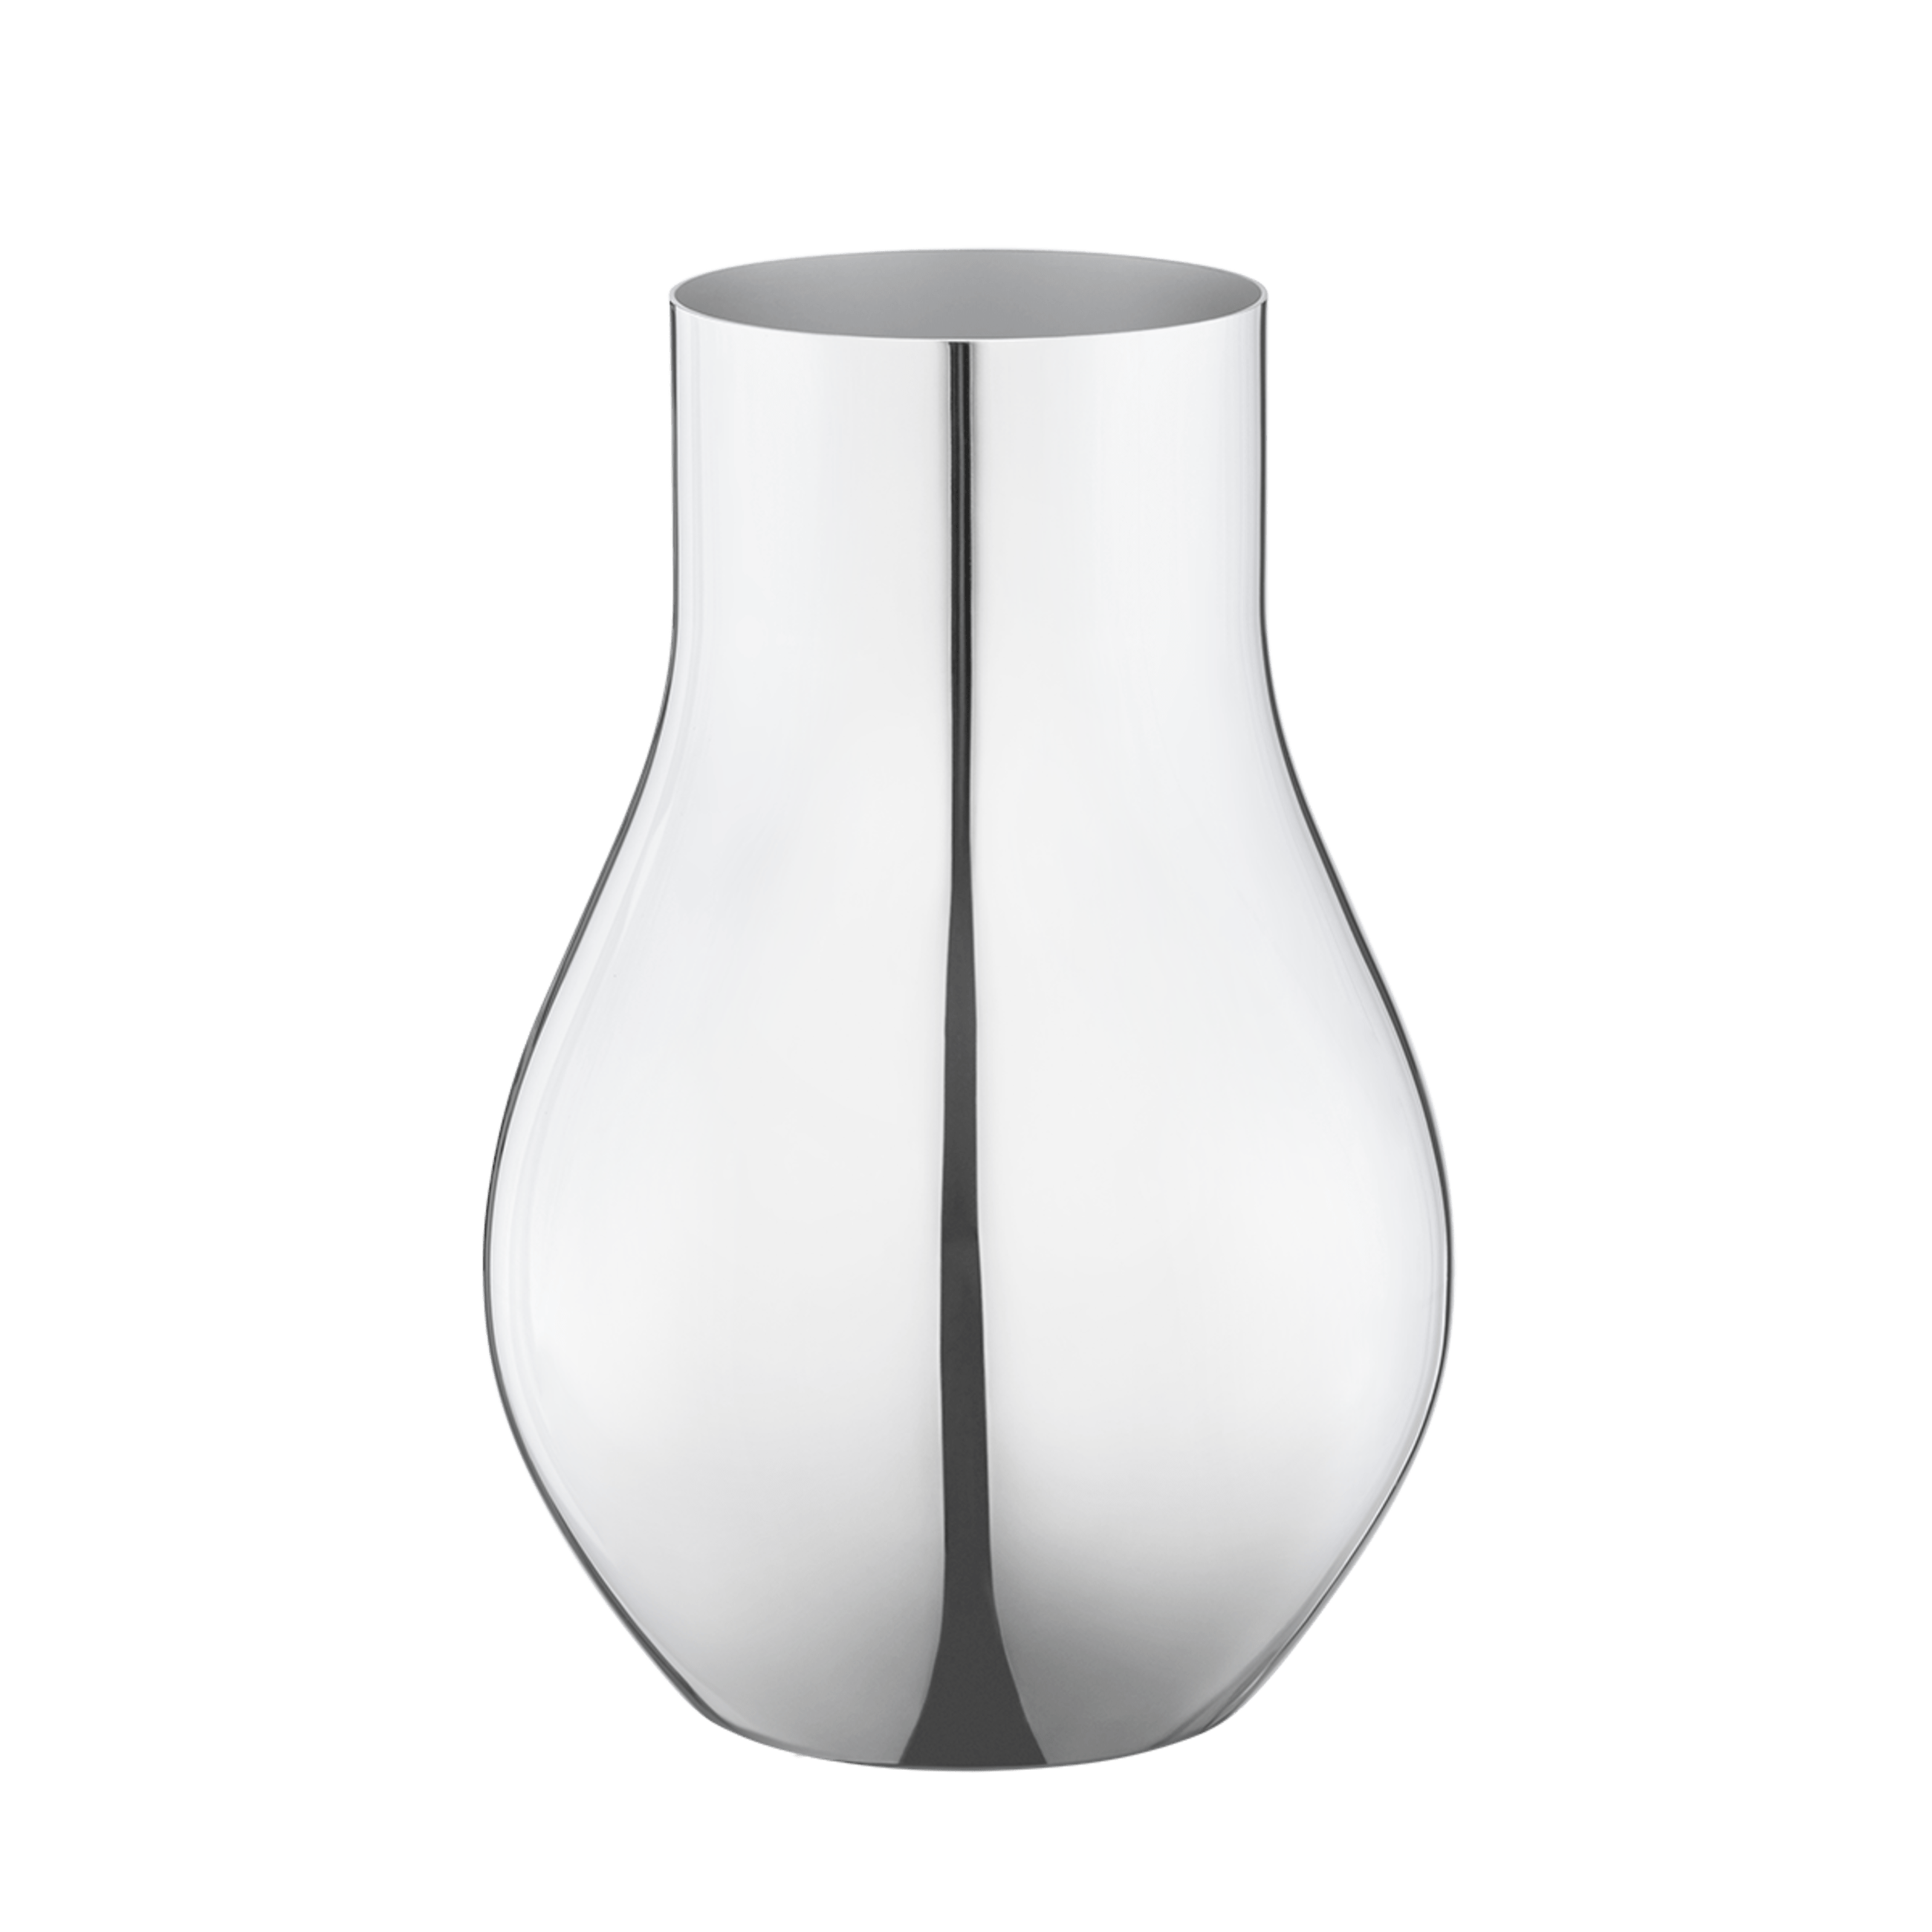 Georg Jensen Vase Cafu 216 mm stainless steel